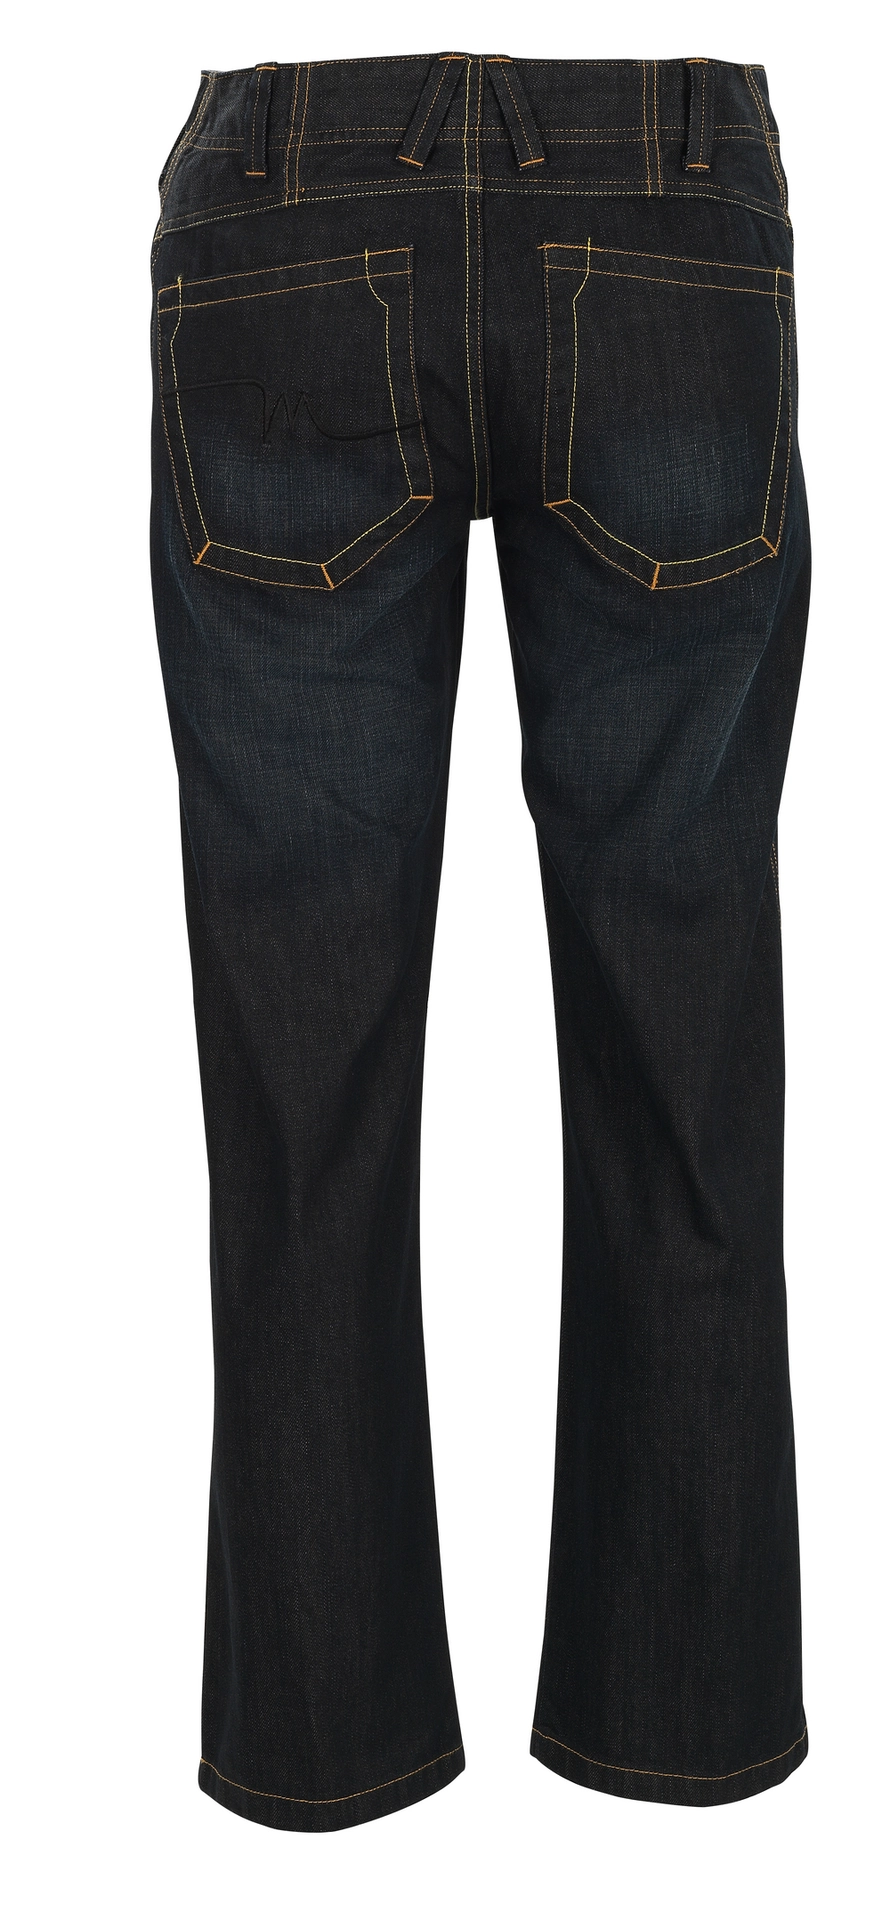 MASCOT® Fafe Jeans Größe 82C45, dunkles denimblau